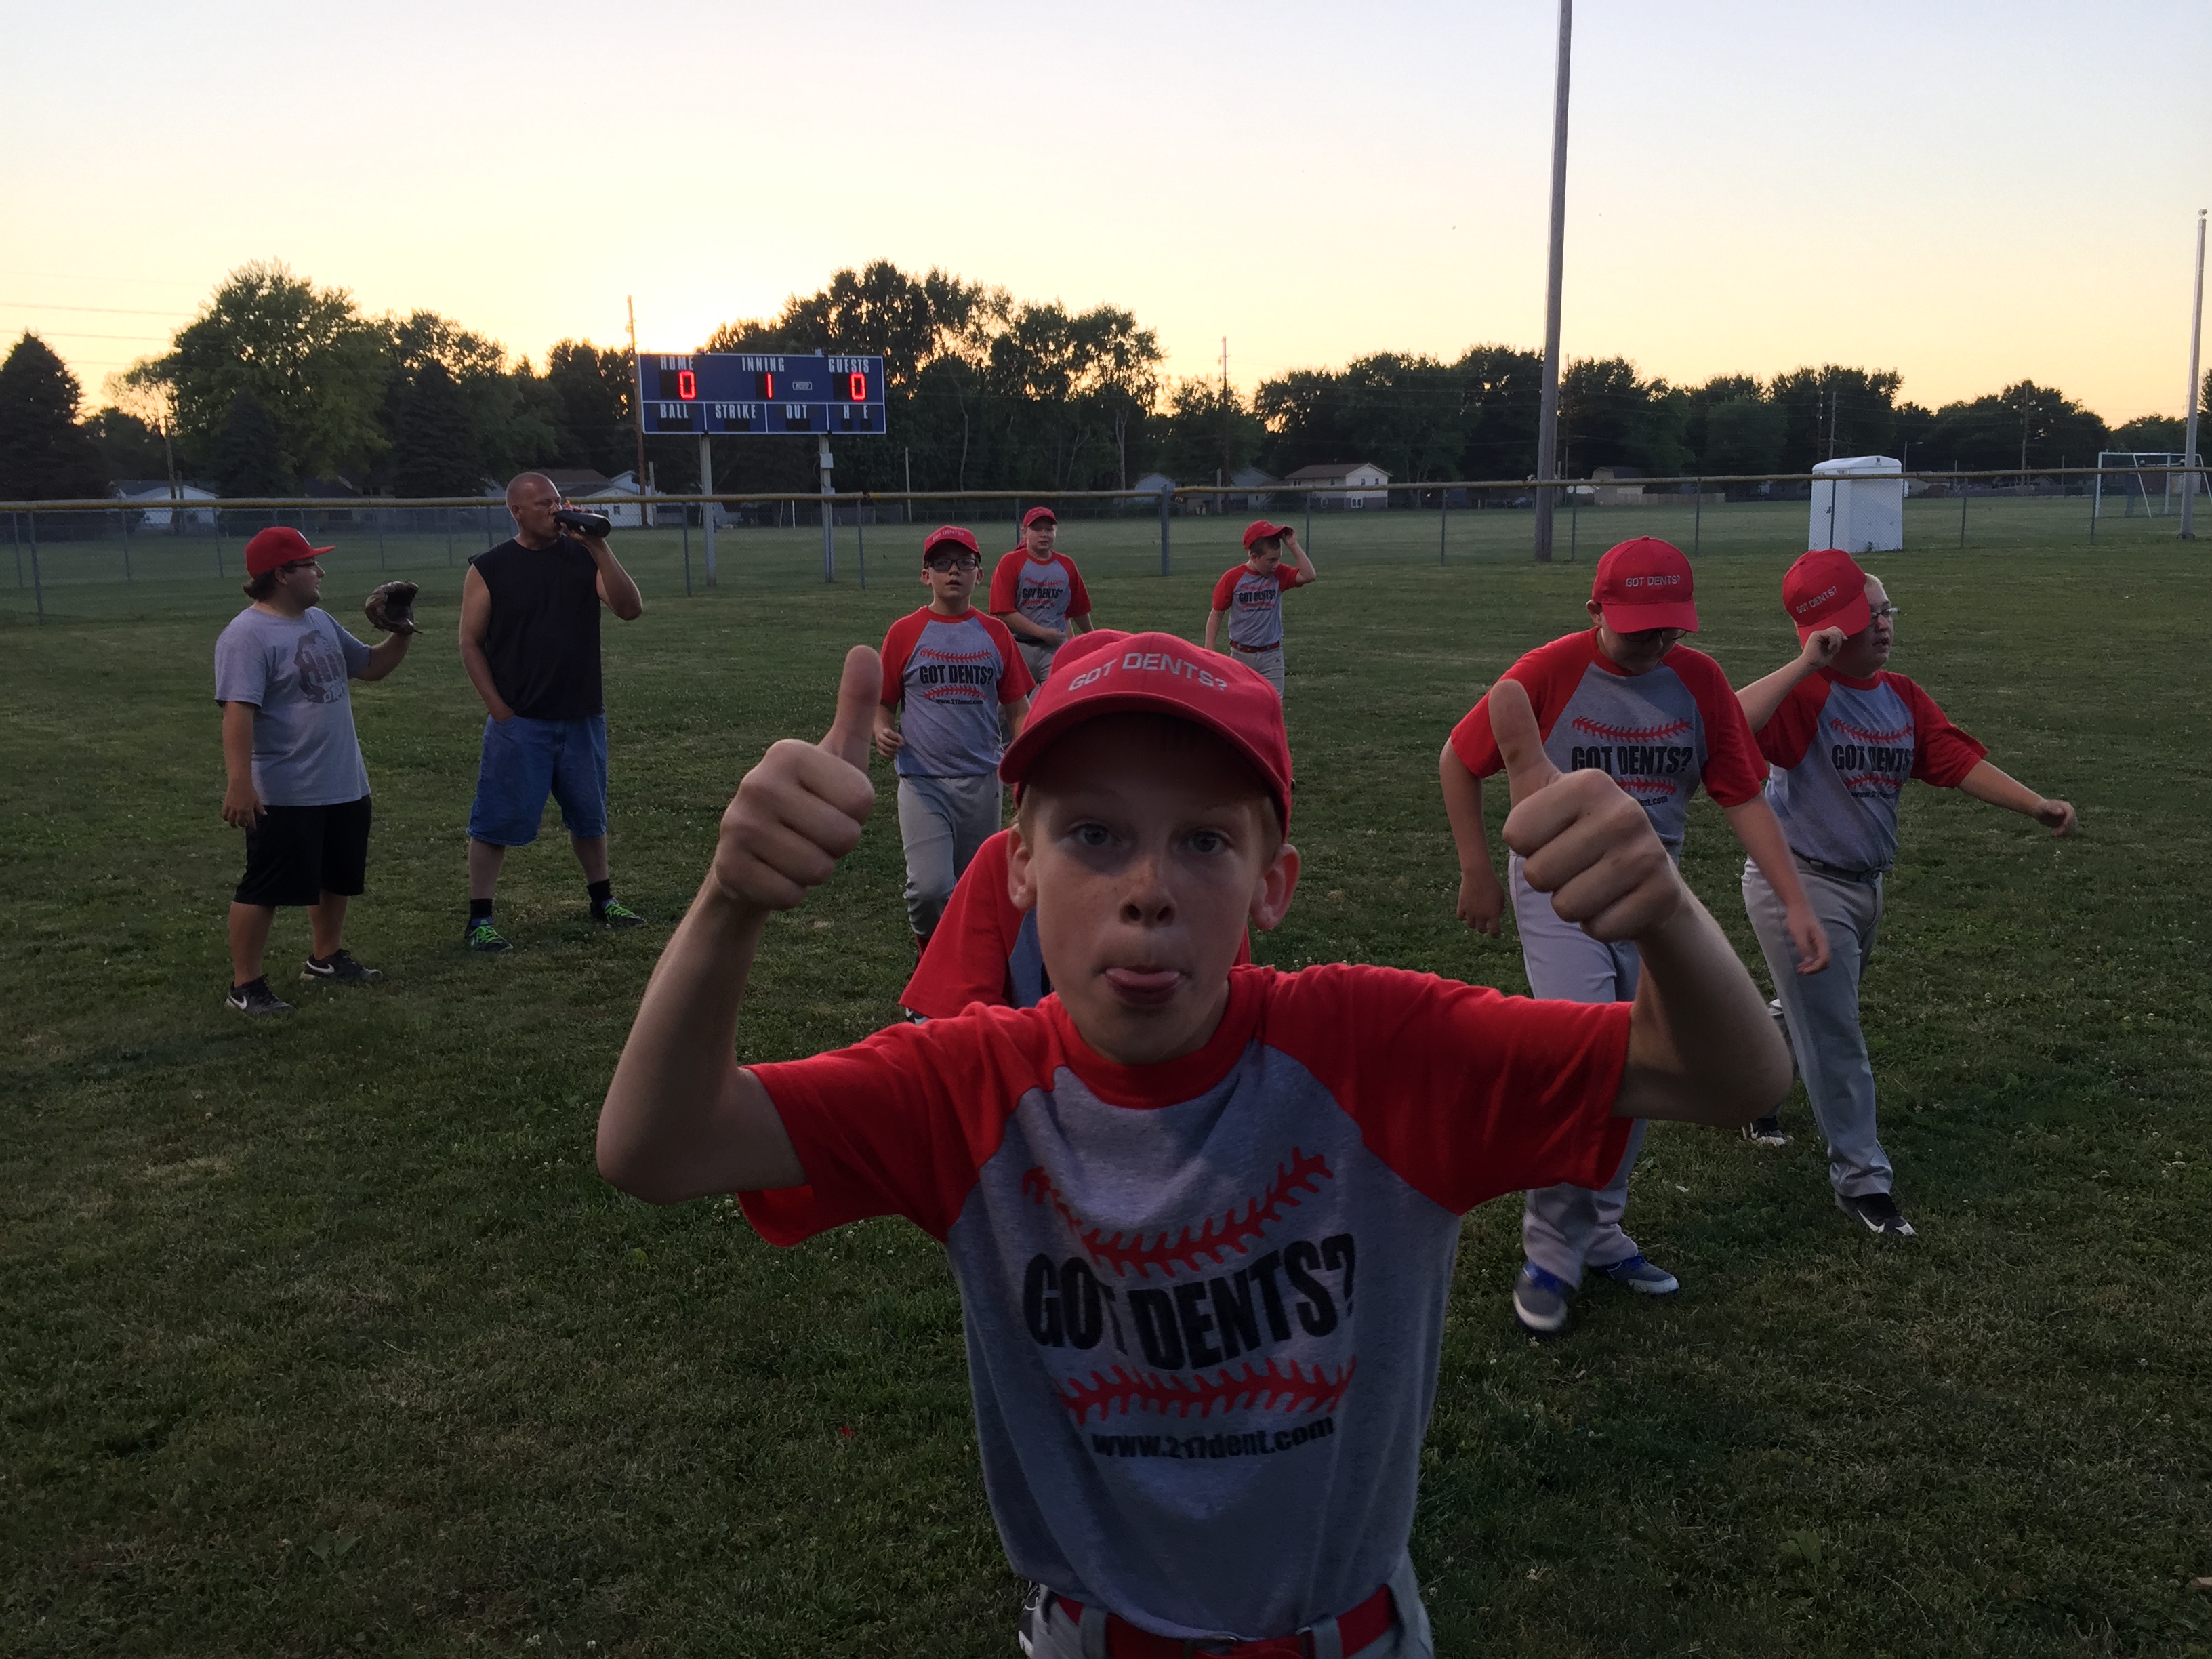 Got Dents Springfield IL, Vs Riverton Rangers of Riverton IL, Baseball Game June 18, 2016